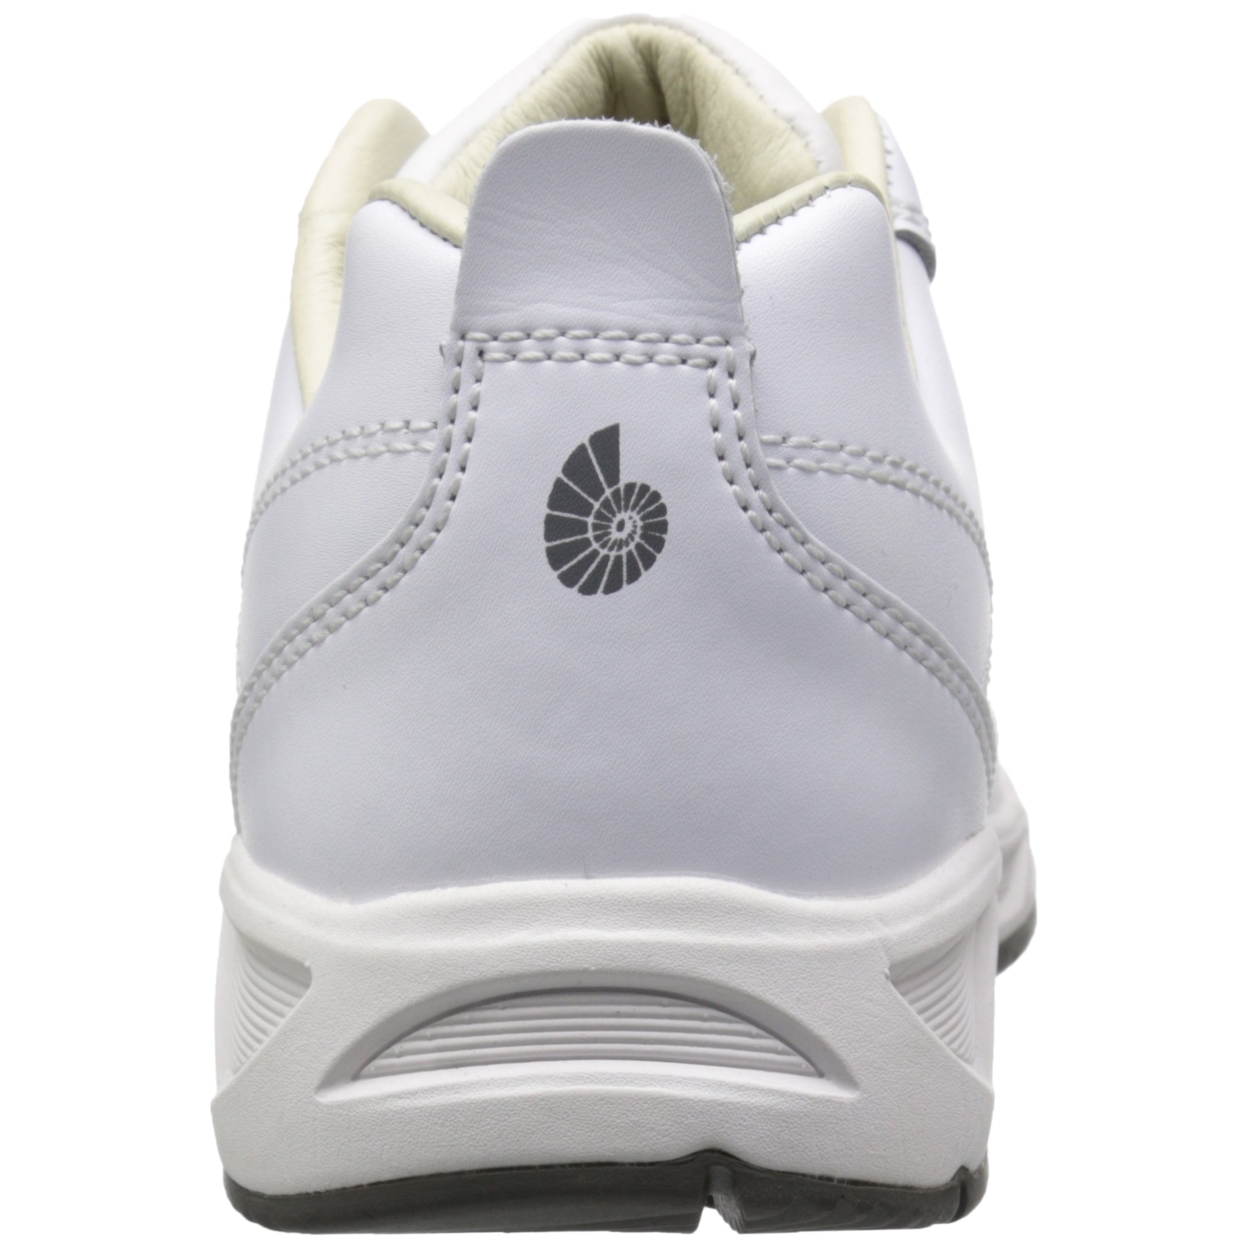 FSI FOOTWEAR SPECIALTIES INTERNATIONAL NAUTILUS Nautilus 4046 ESD No Exposed Metal Soft Toe Clean Room Athletic Shoe WHITE - WHITE, 5-M